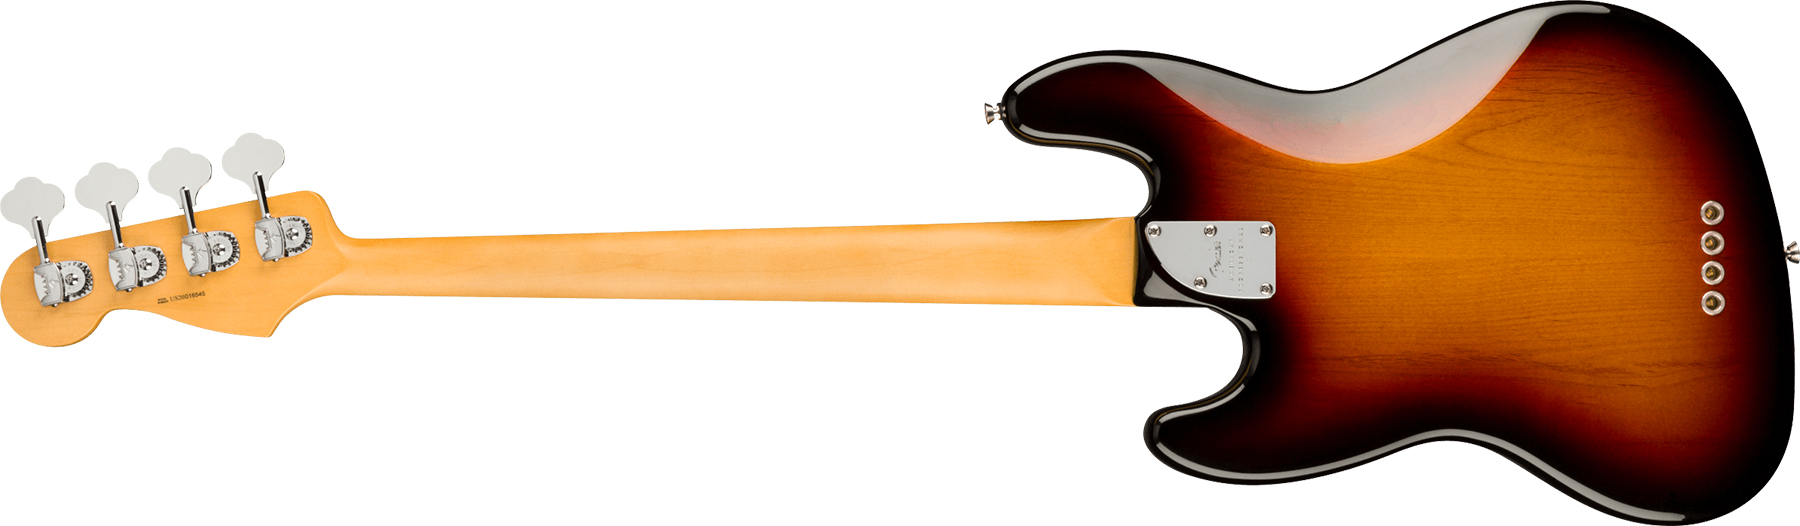 Fender Jazz Bass American Professional Ii Usa Mn - 3-color Sunburst - Basse Électrique Solid Body - Variation 1